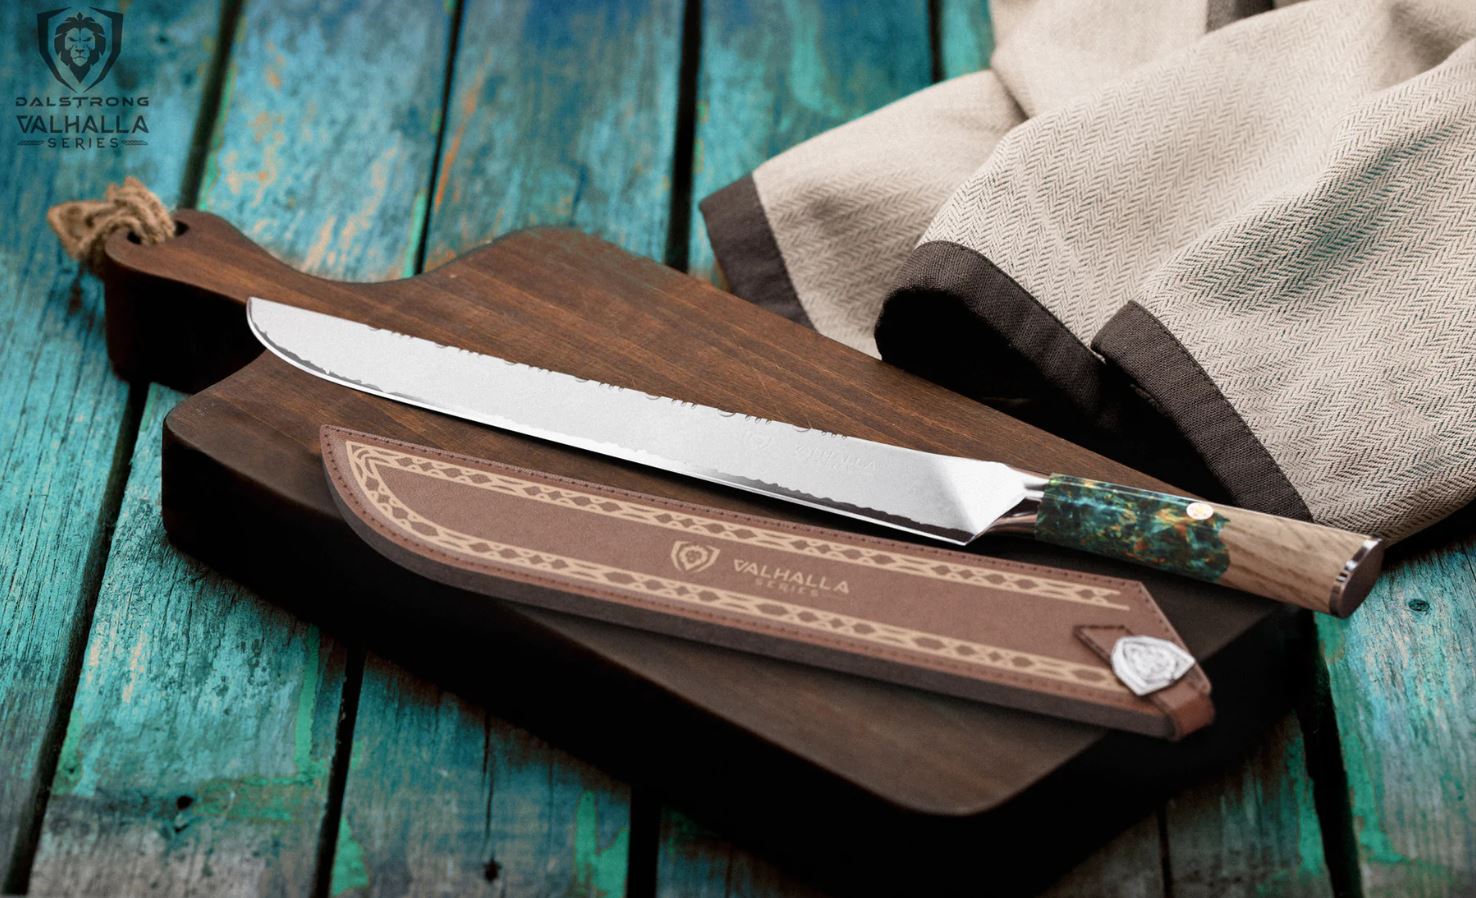 Leather vs. Kydex Knife Sheaths: A Comparison